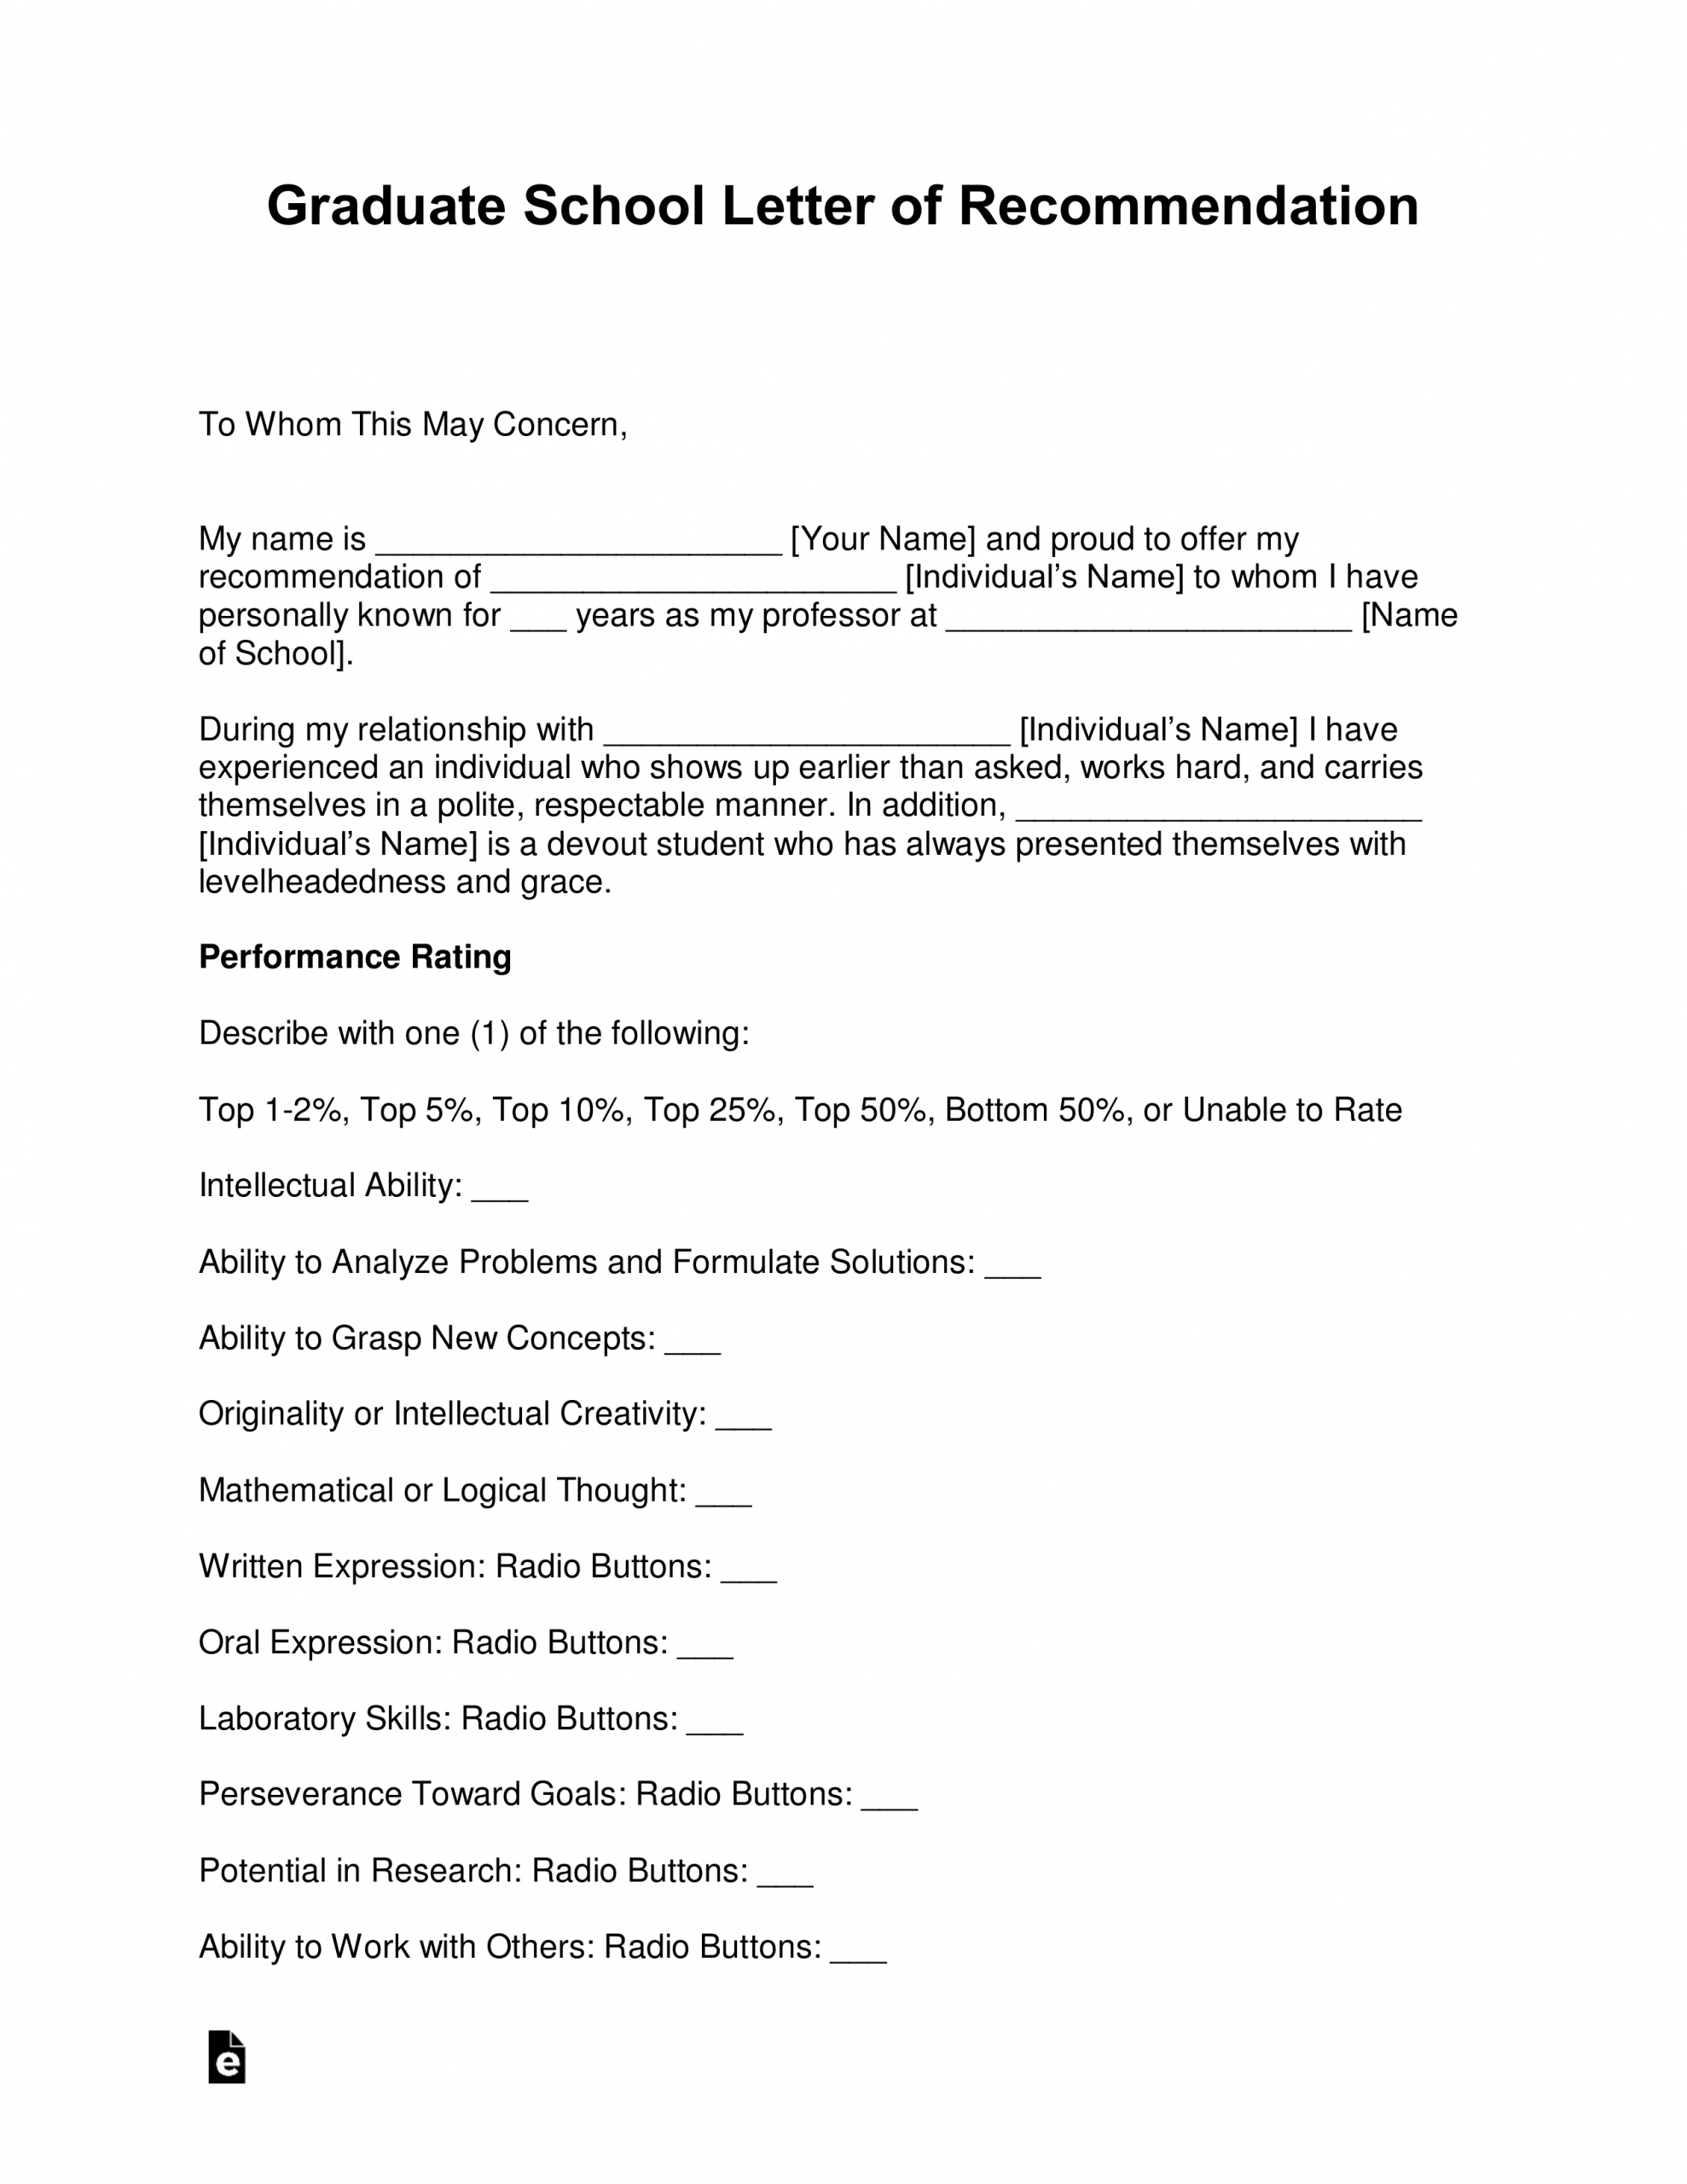 Free Graduate School Letter Of Recommendation Template inside measurements 2550 X 3301